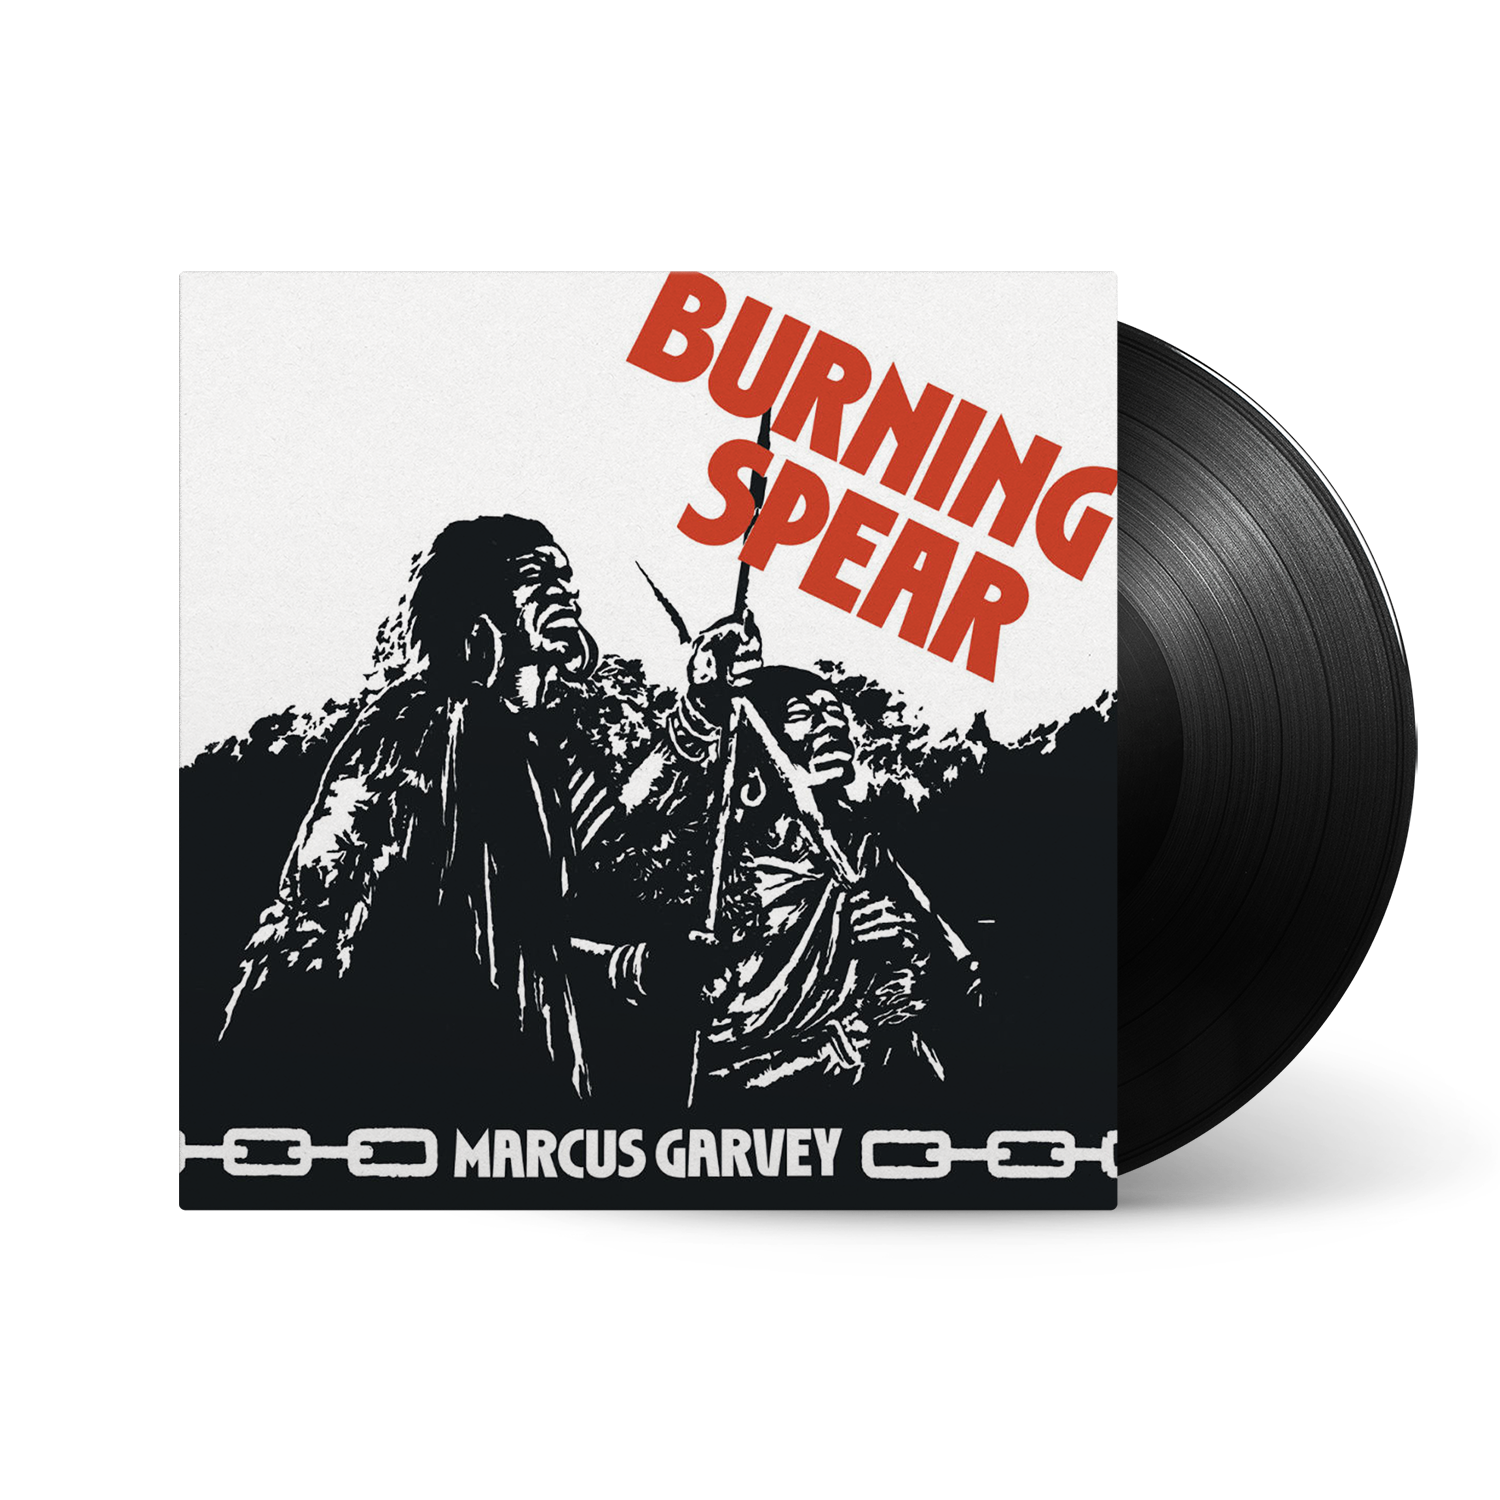 Burning Spear - Marcus Garvey: Vinyl LP - Island Records